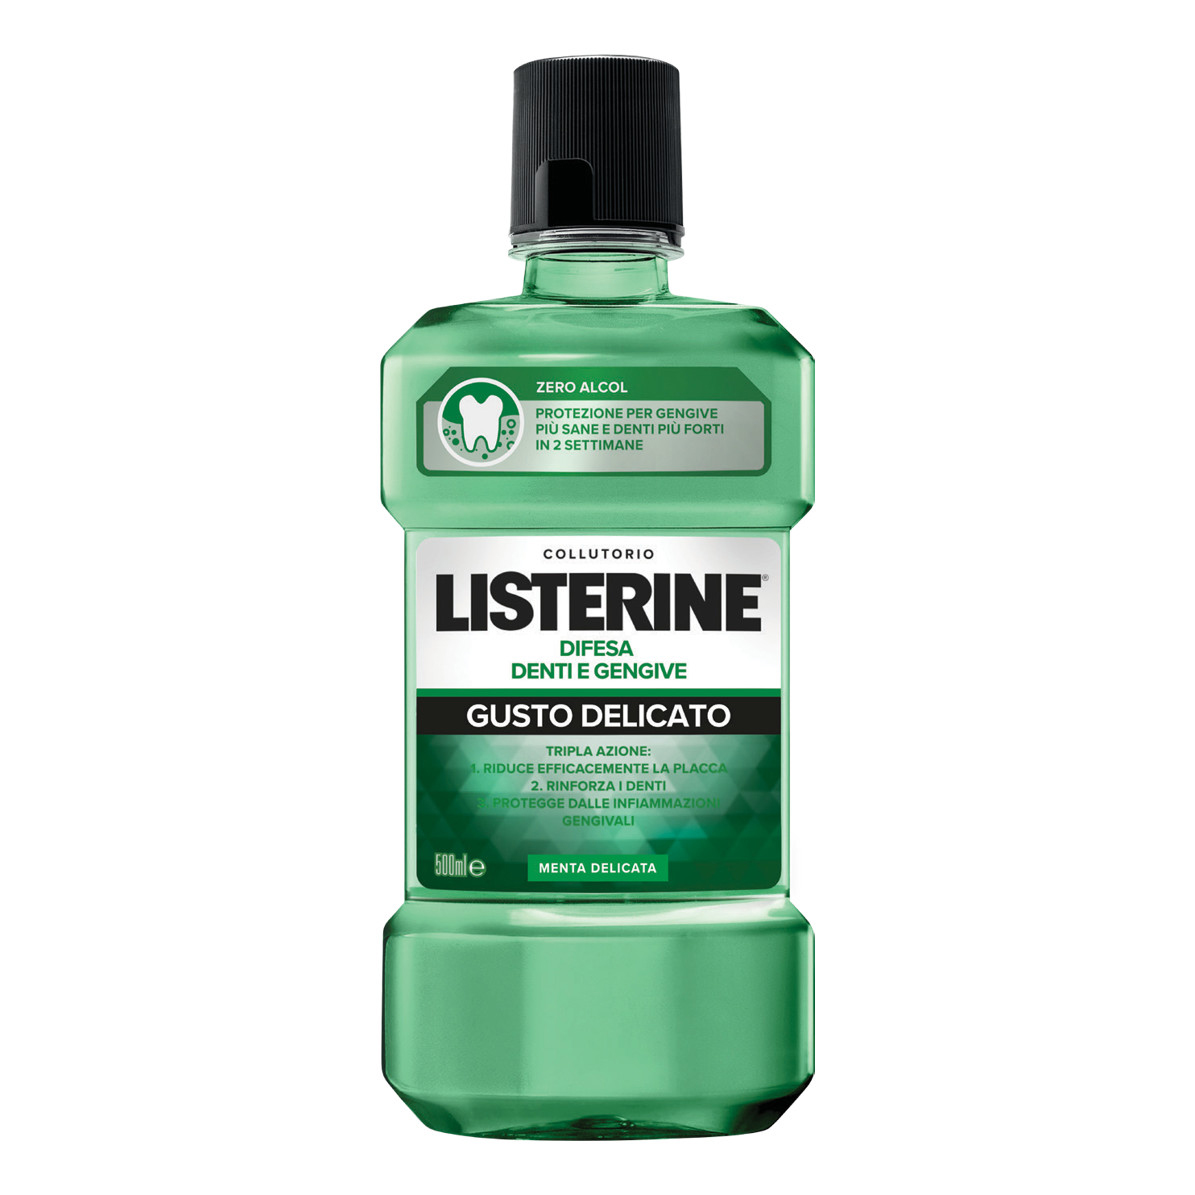 Listerine Denti≥ngive 500ml